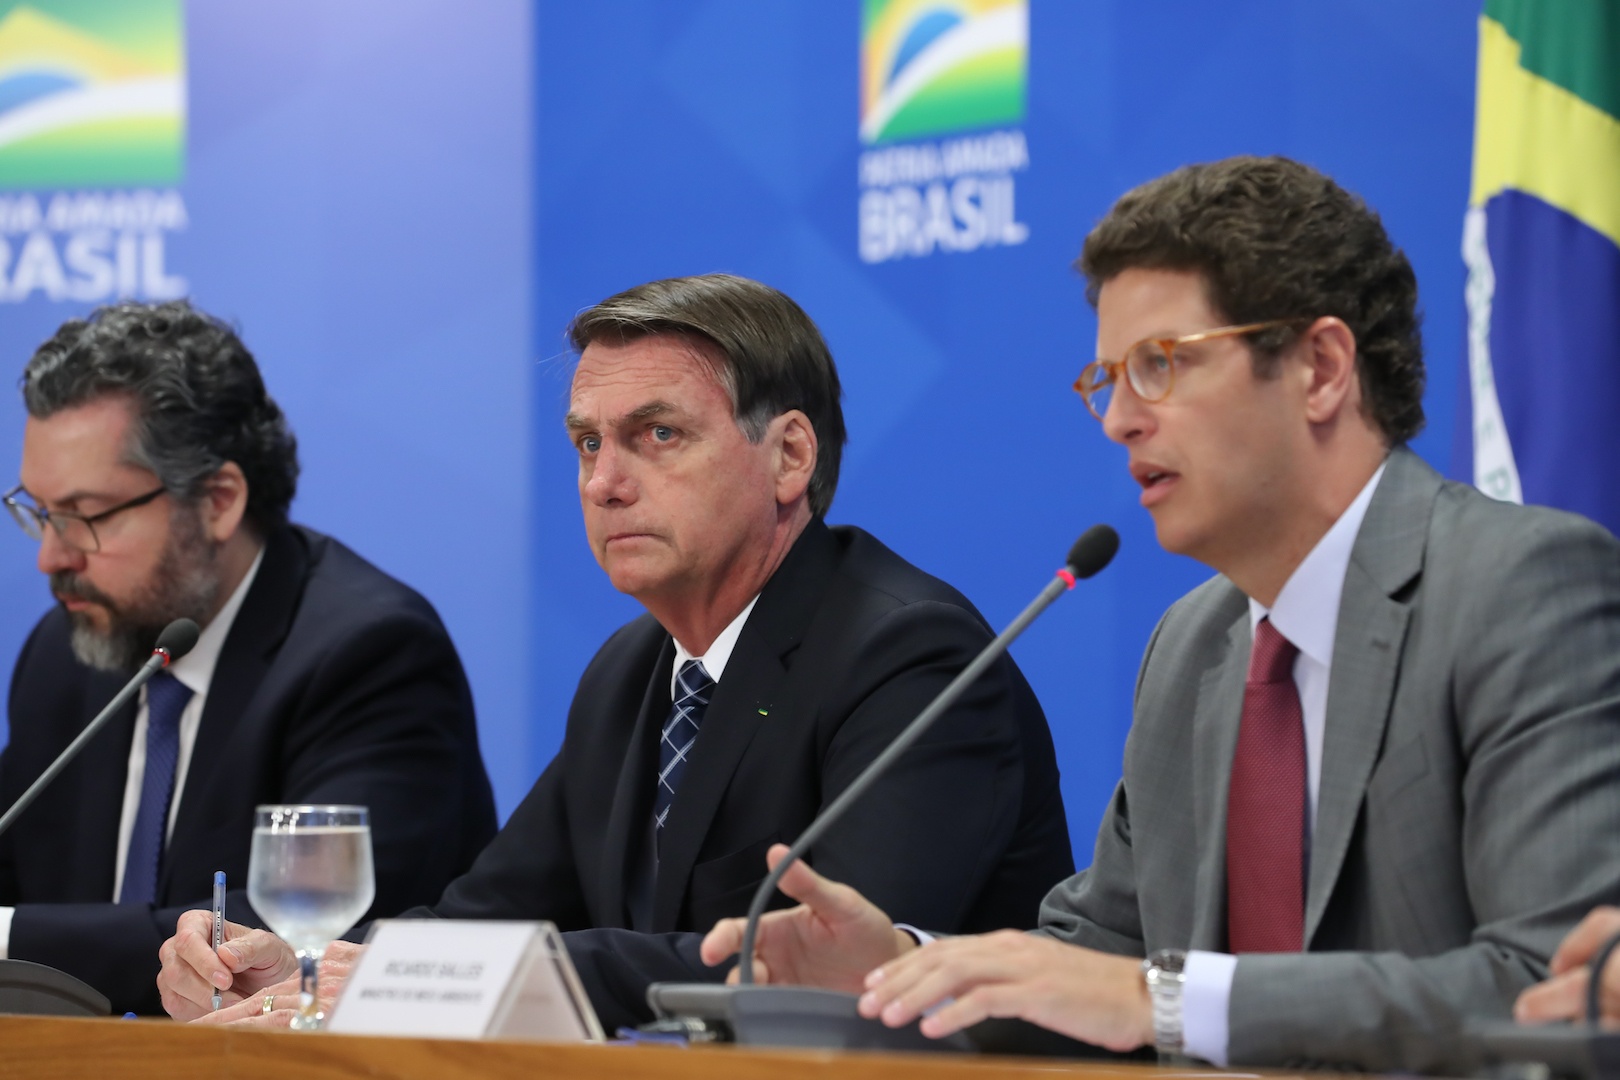 Brazil,Both President Bolsonaro and Environment Minister, Salles, have taken an anti-environmental stance.